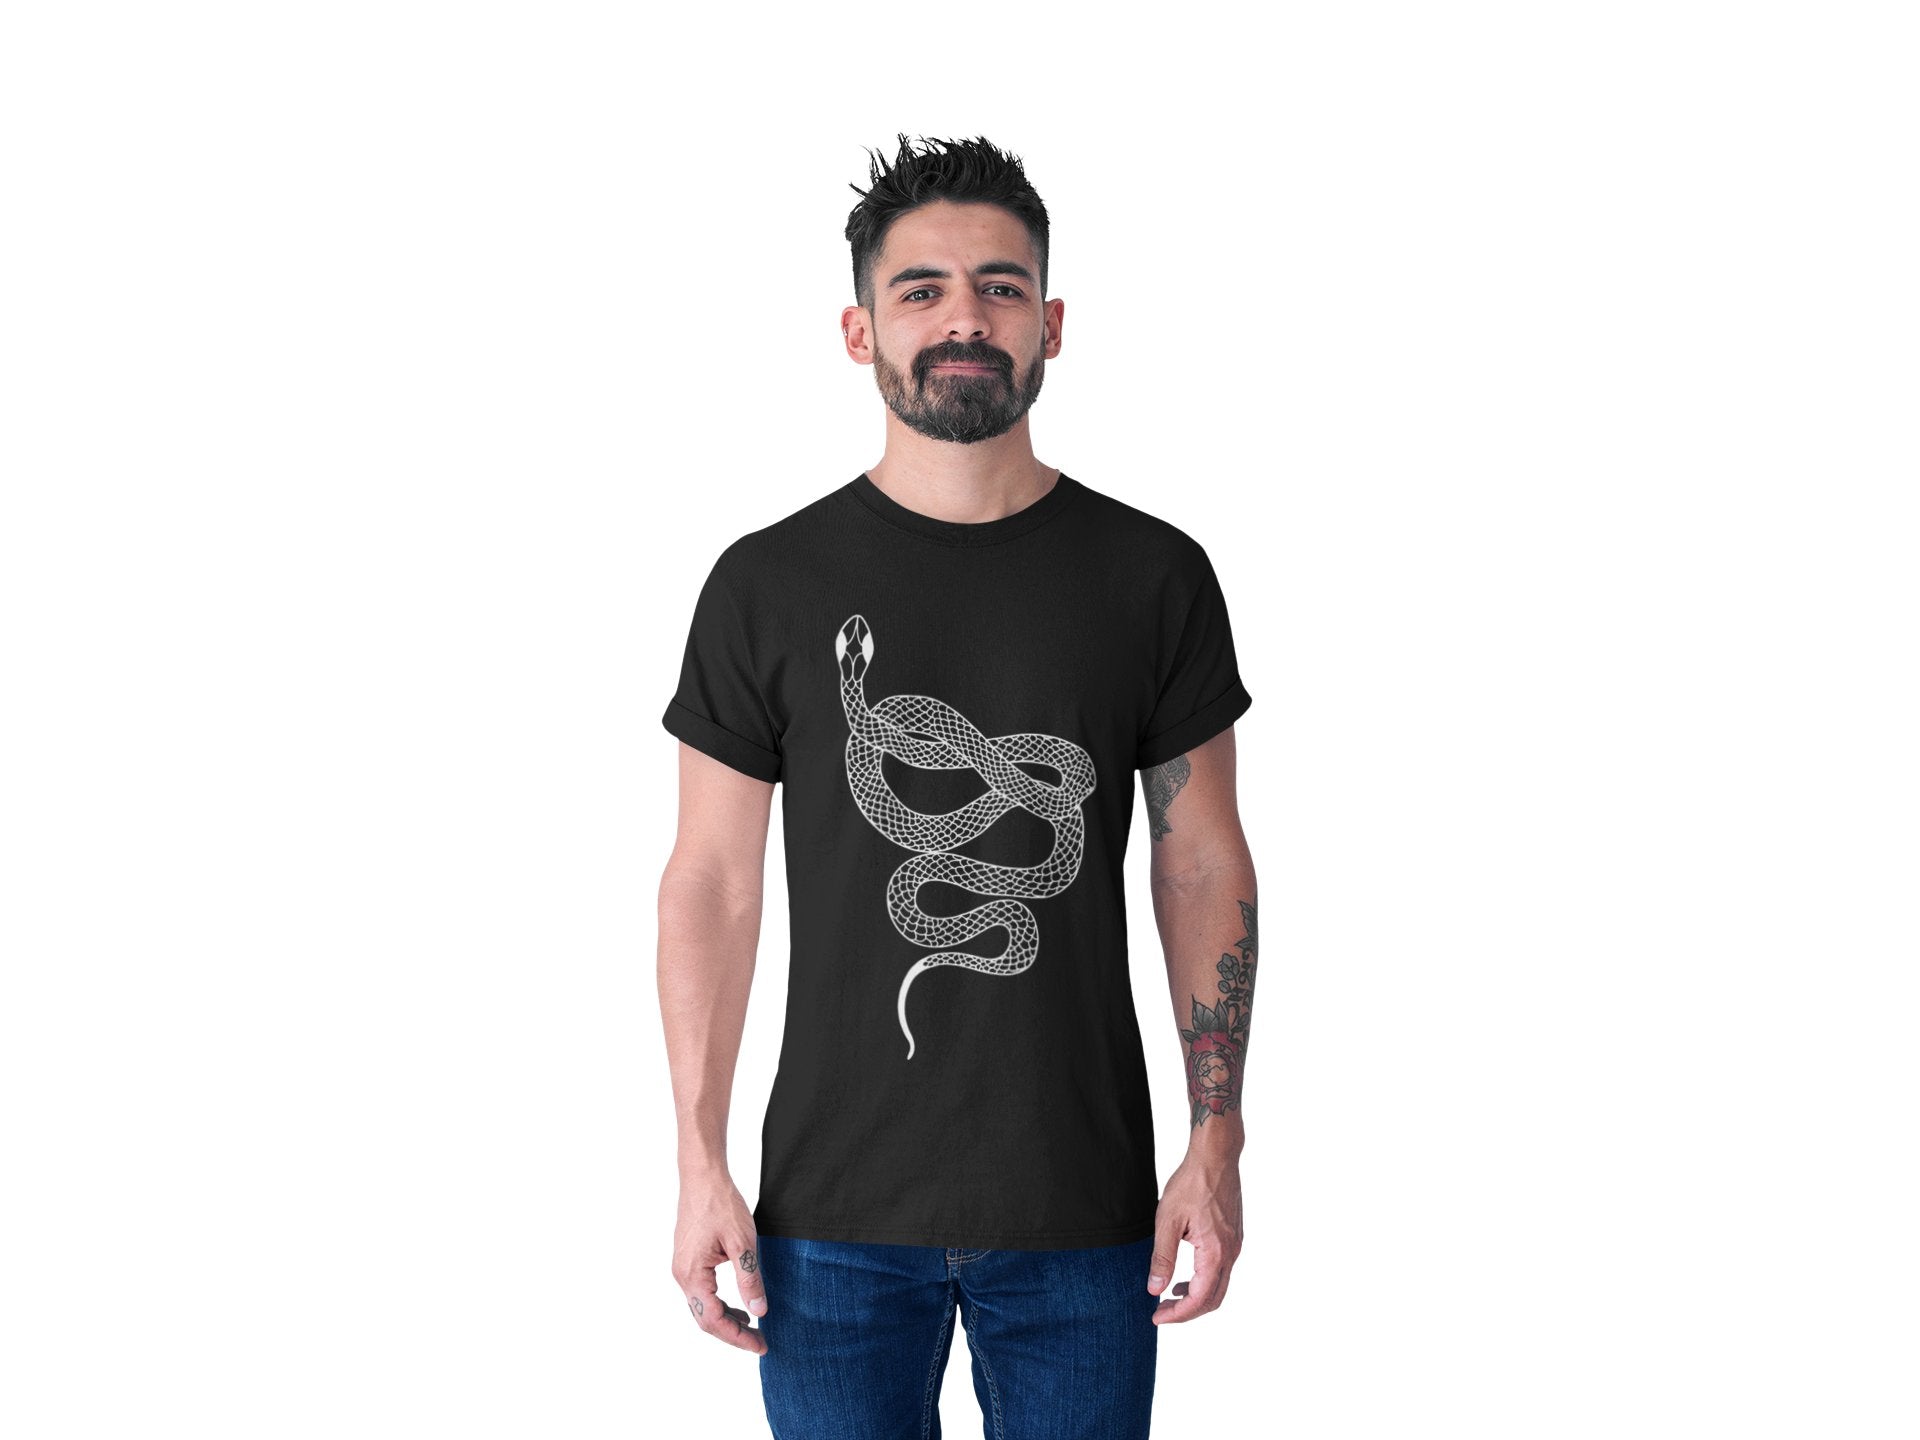 "Snake" Tee - Wow T-Shirts